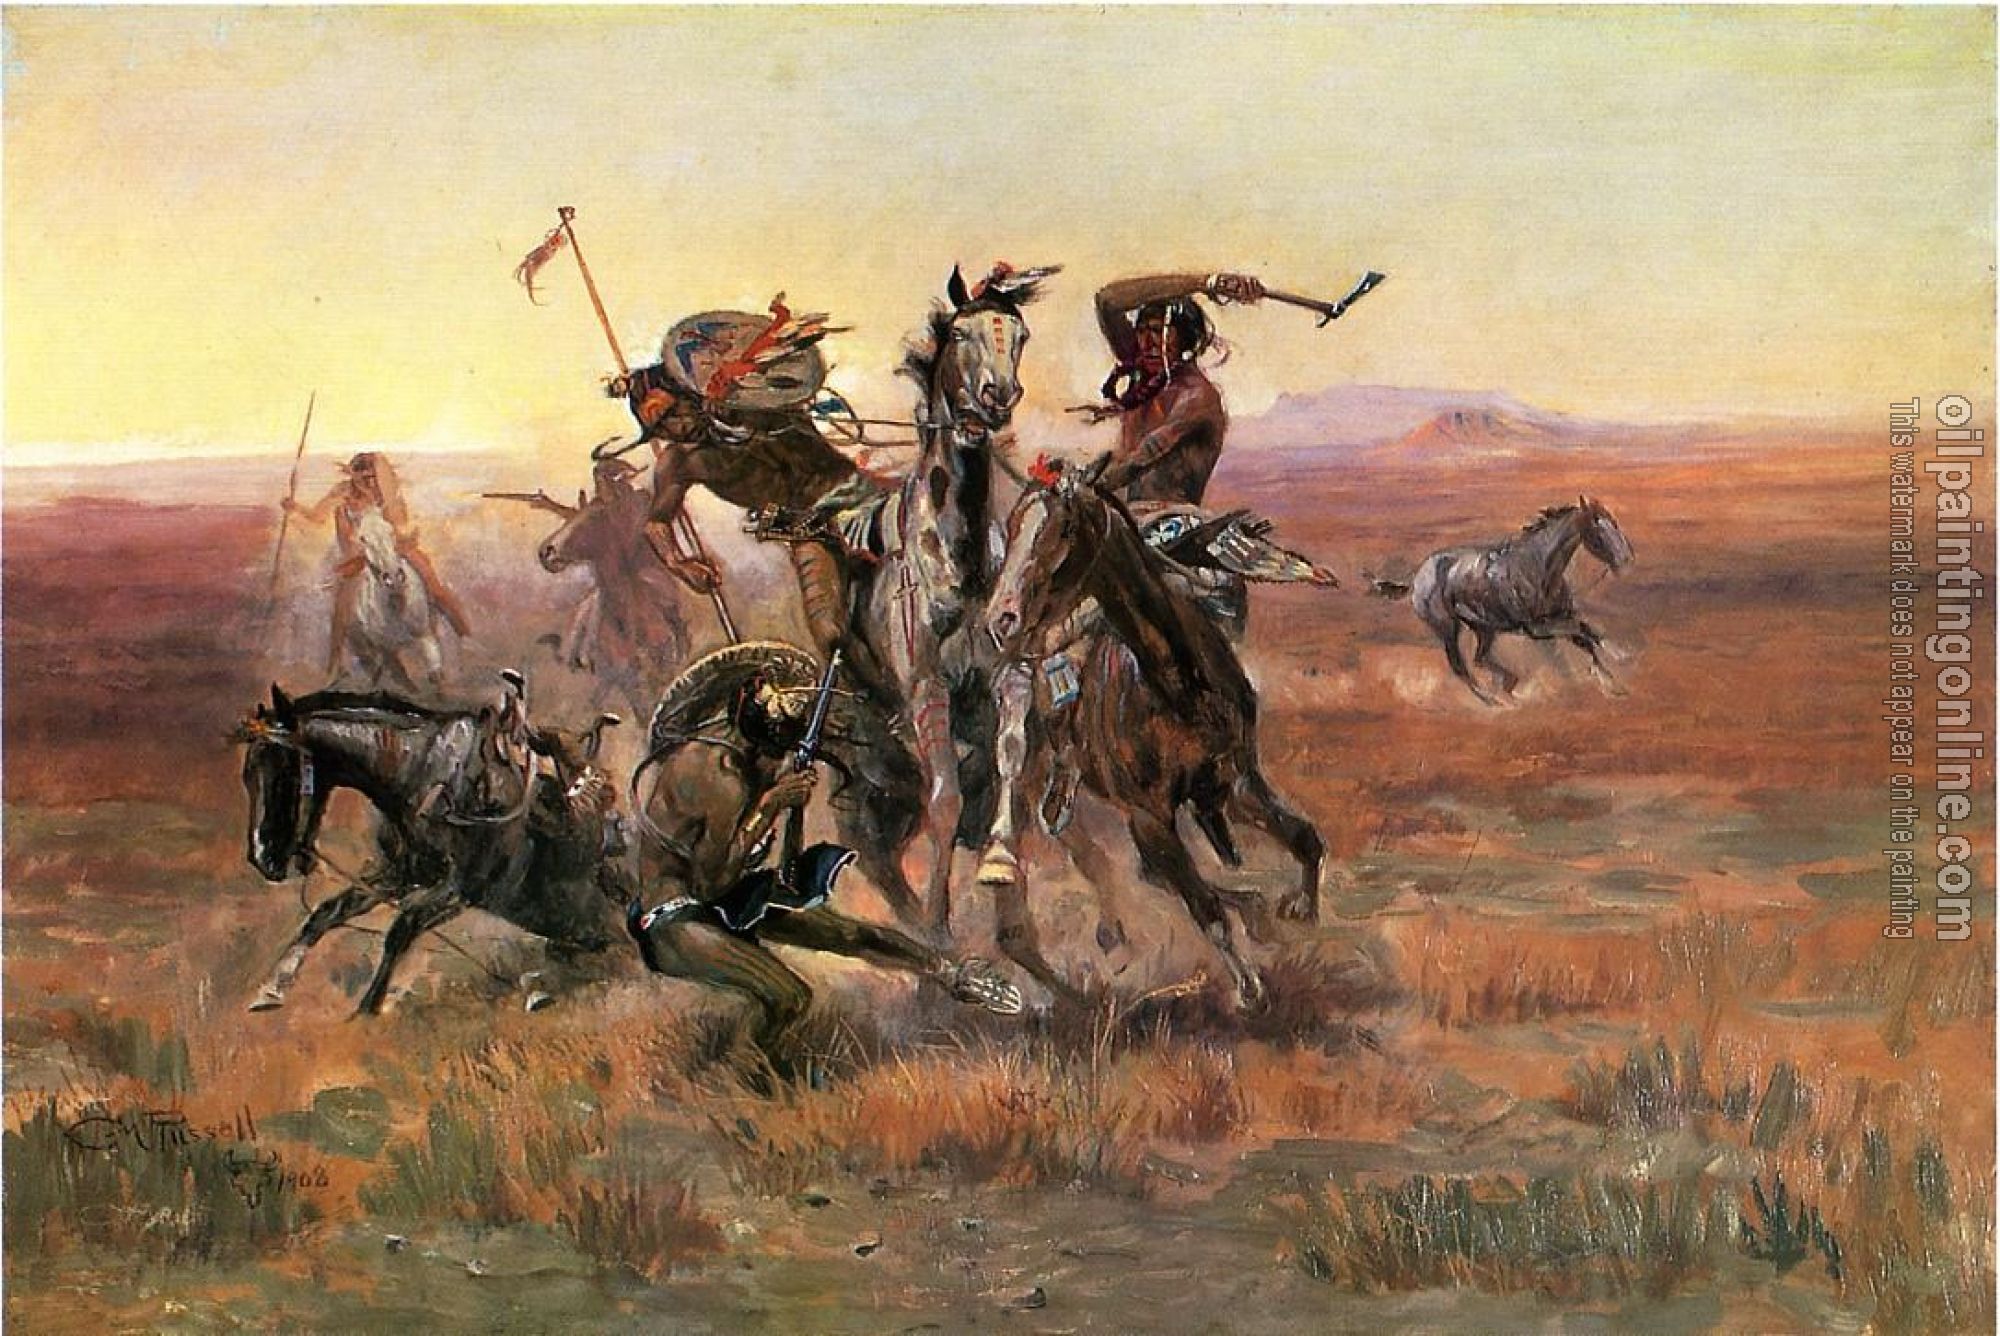 Charles Marion Russell - When Blackfeet and Sioux Meet